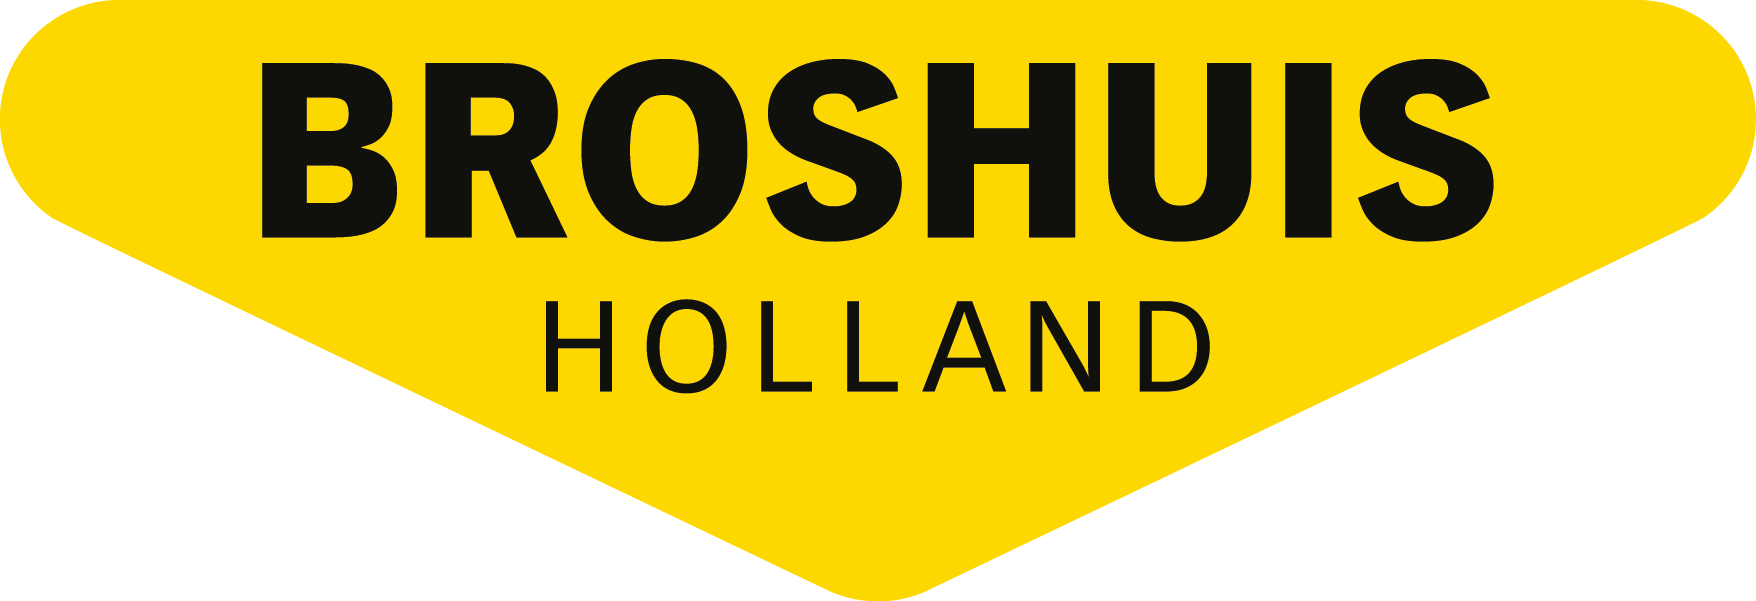 Logo Broshuis